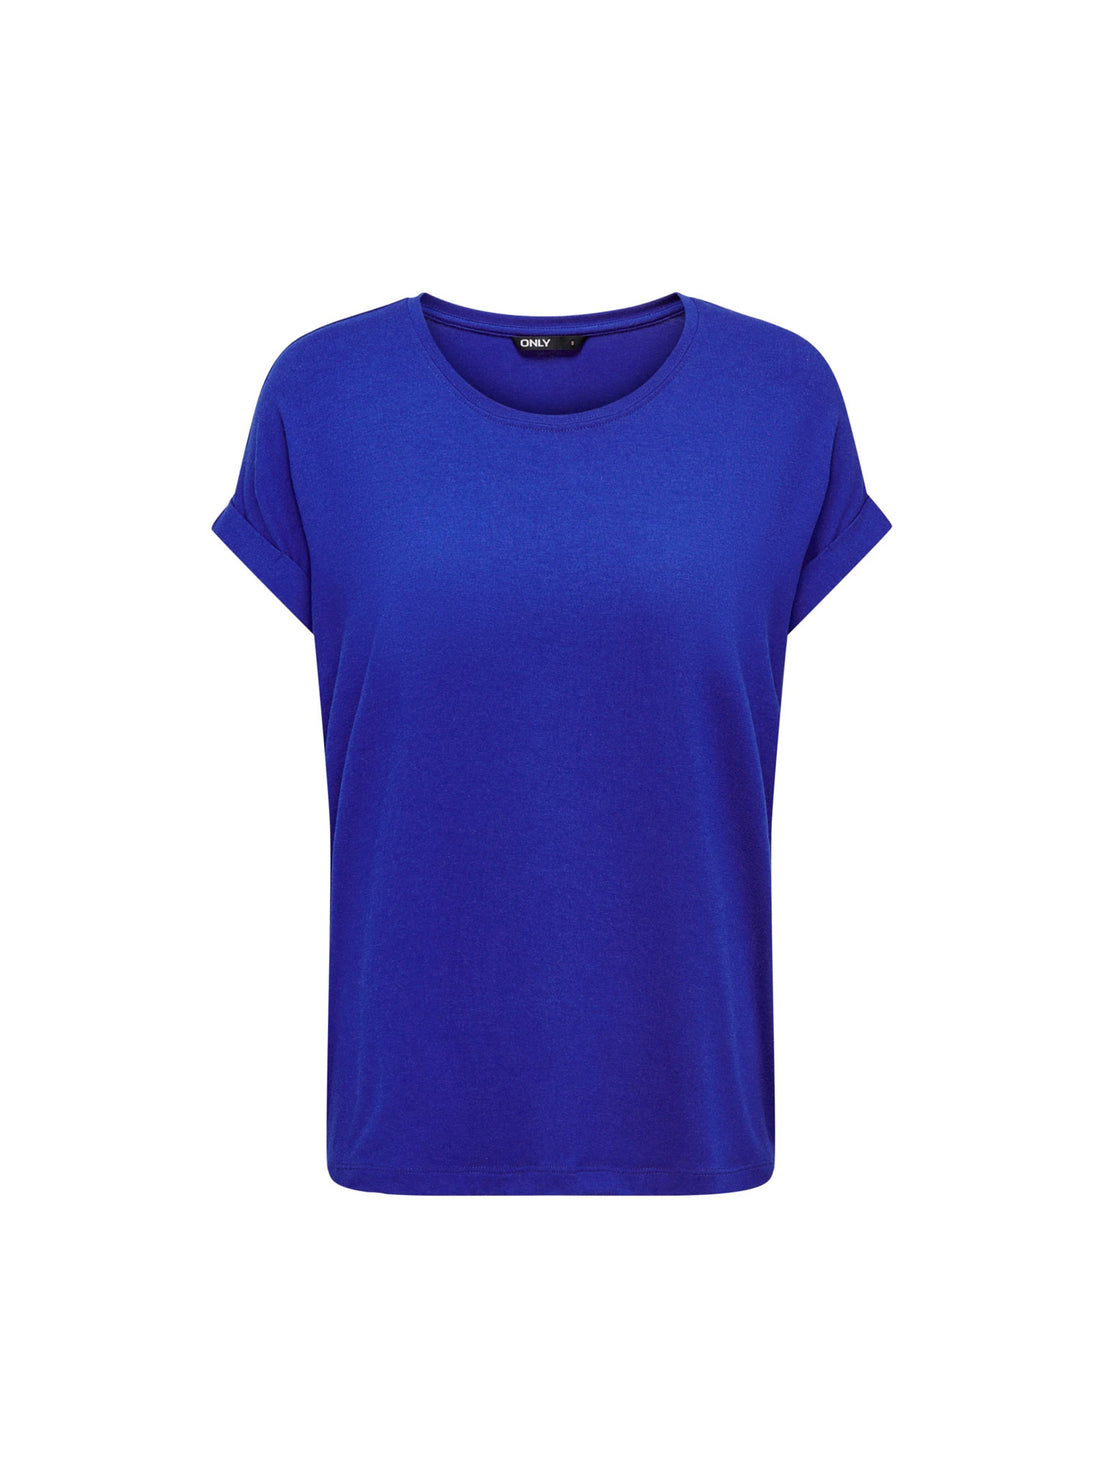 T-shirt Bluette Only